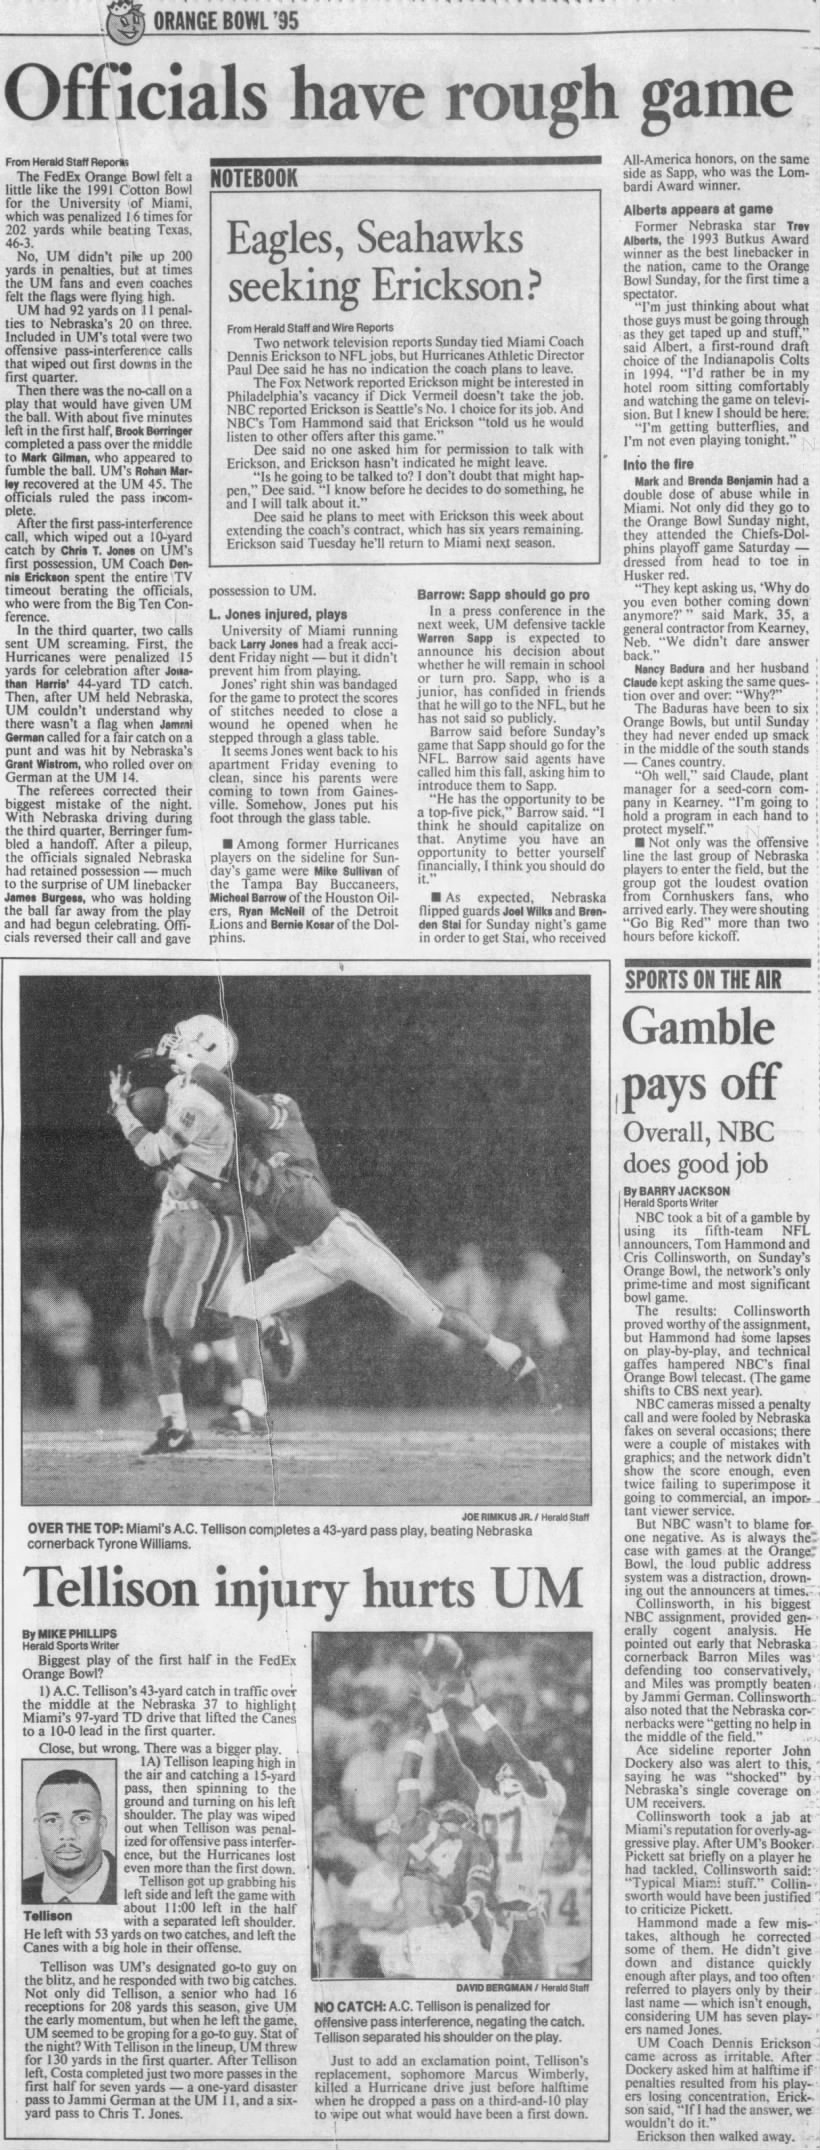 1995 Orange Bowl, Miami Herald 2